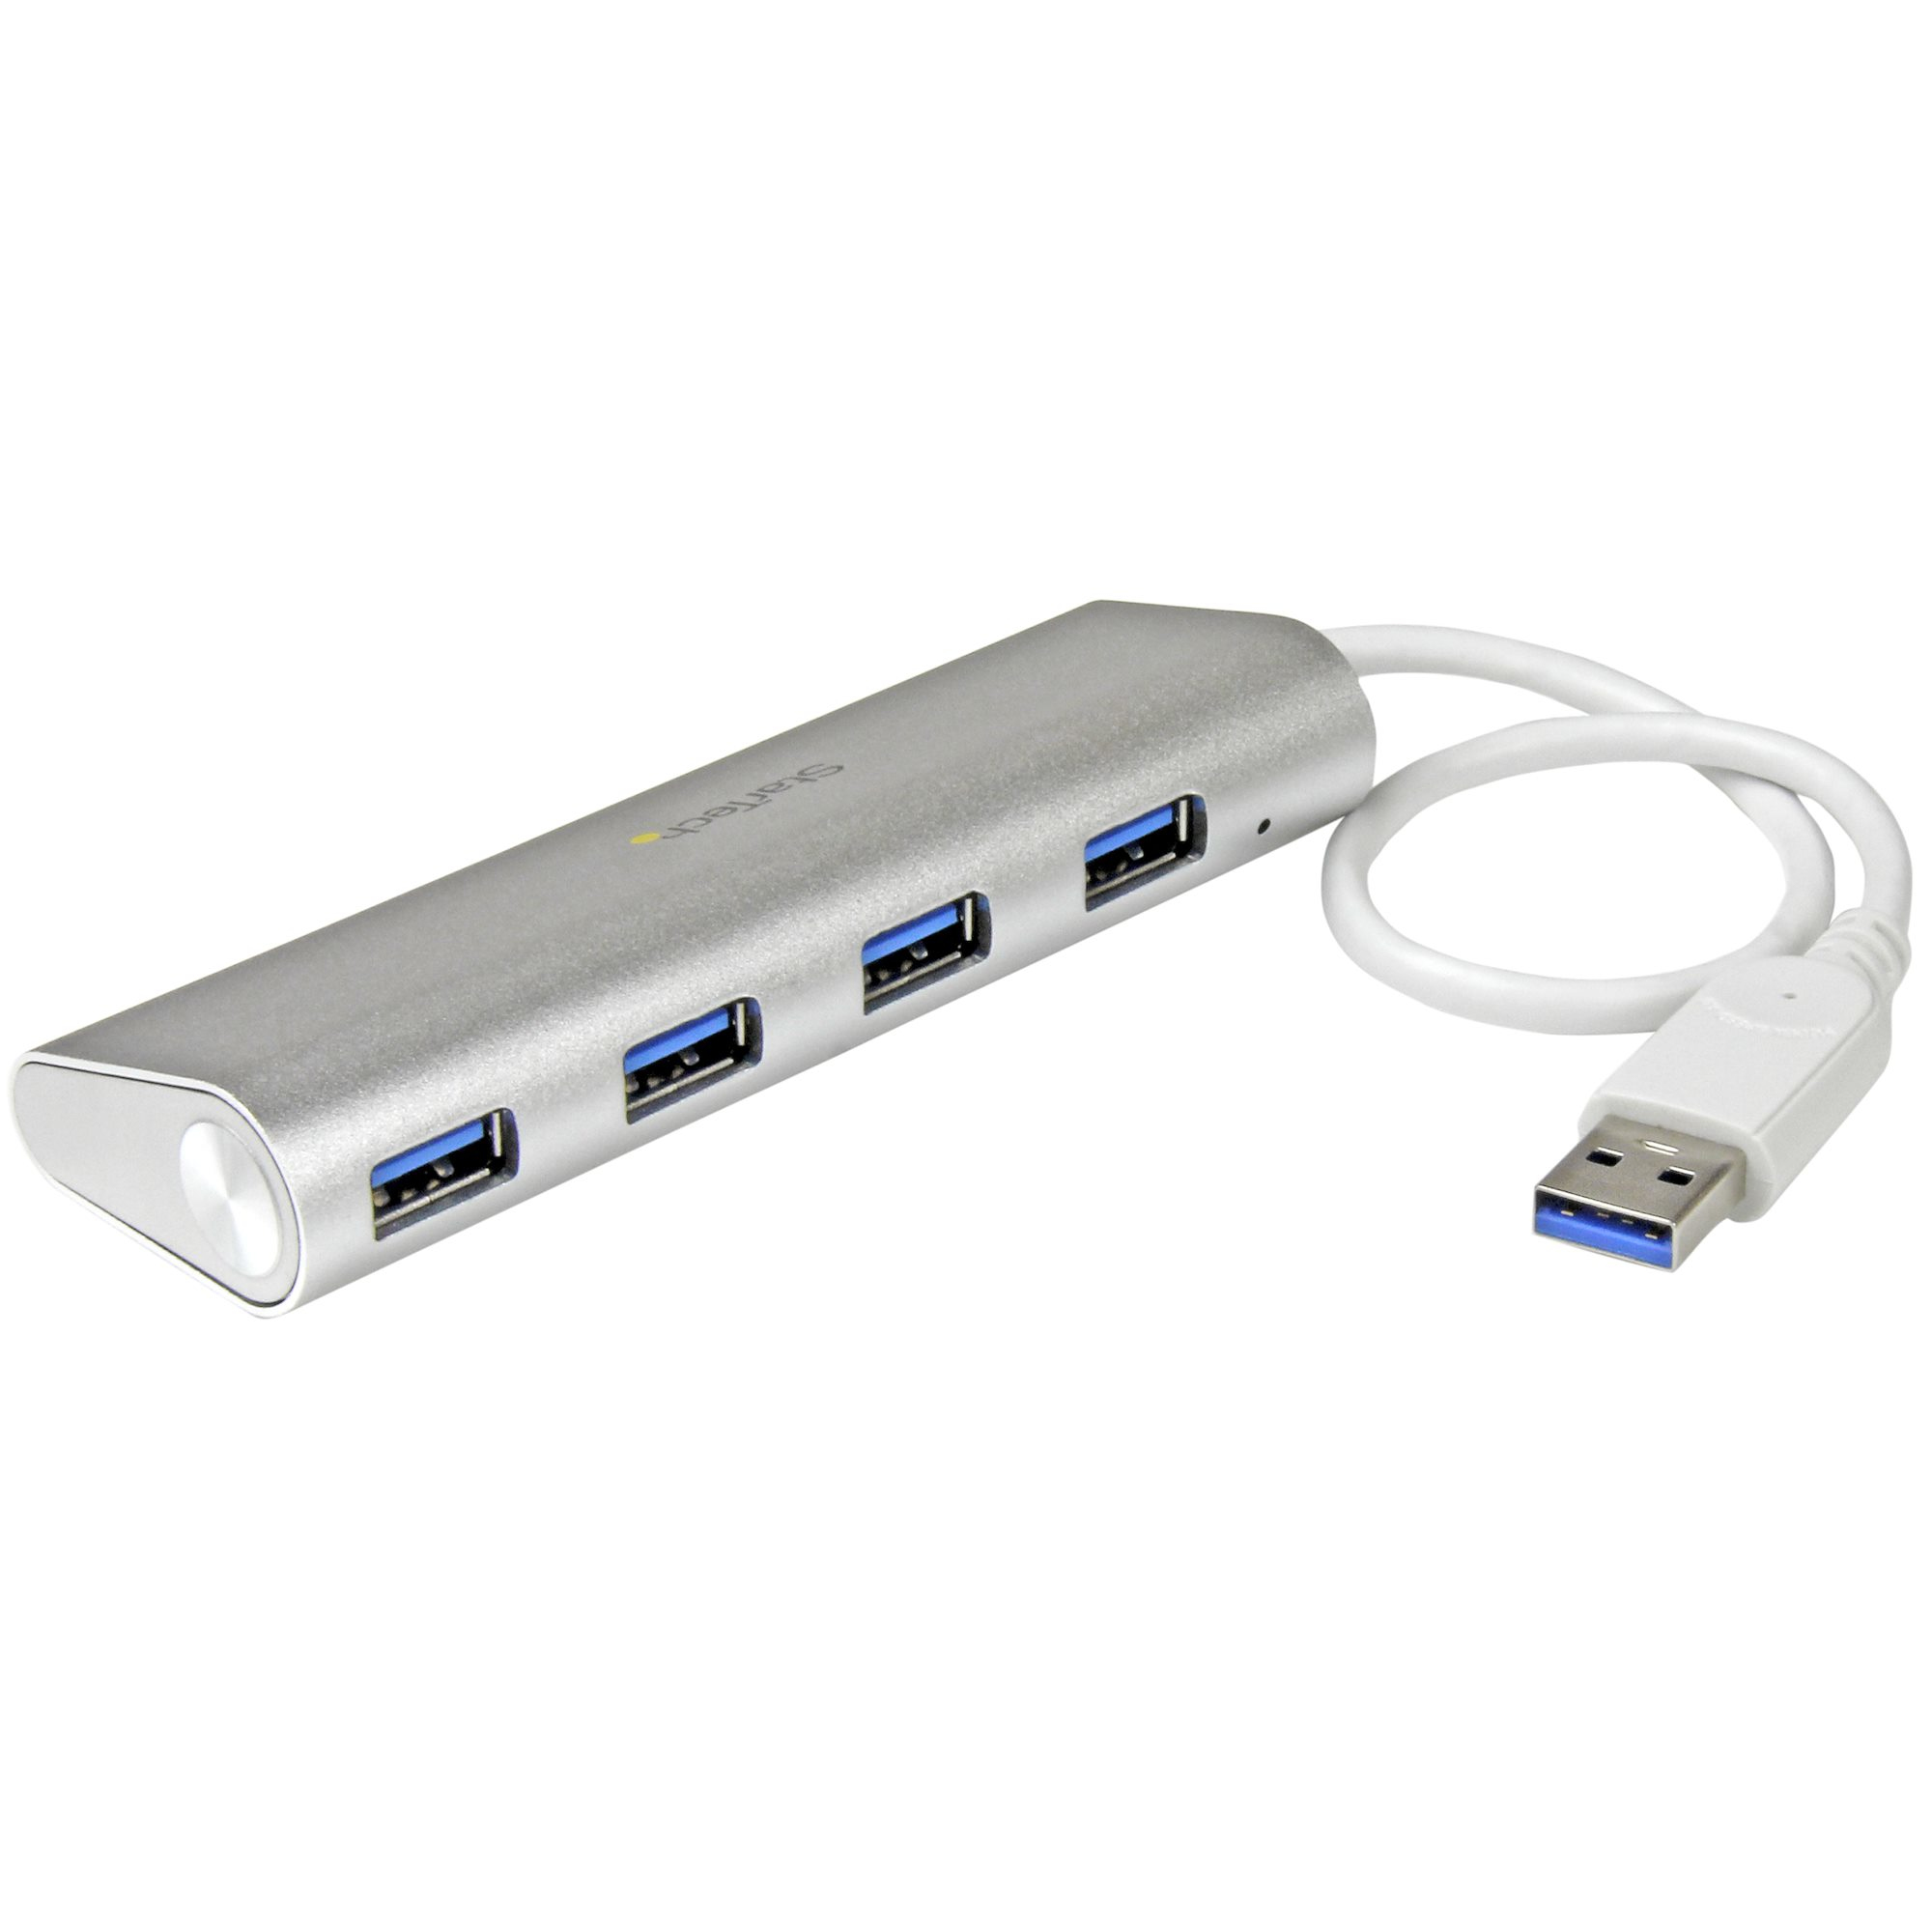 StarTech.com 4 Port kompakter USB 3.0 Hub mit eingebautem Kabel